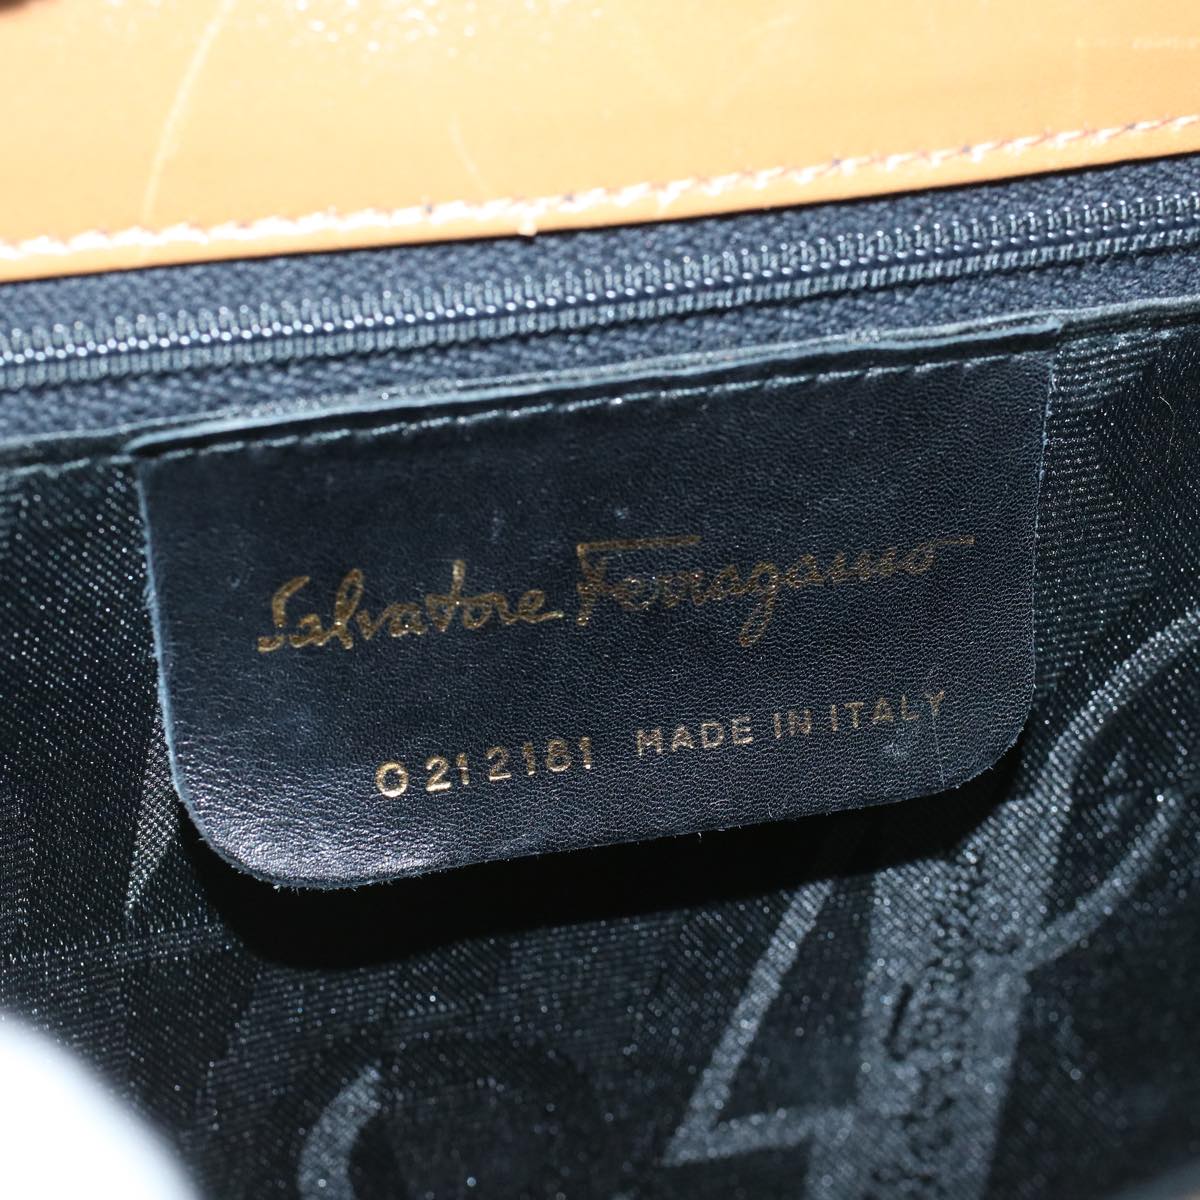 Salvatore Ferragamo Gancini Hand Bag Leather Brown Auth 59995